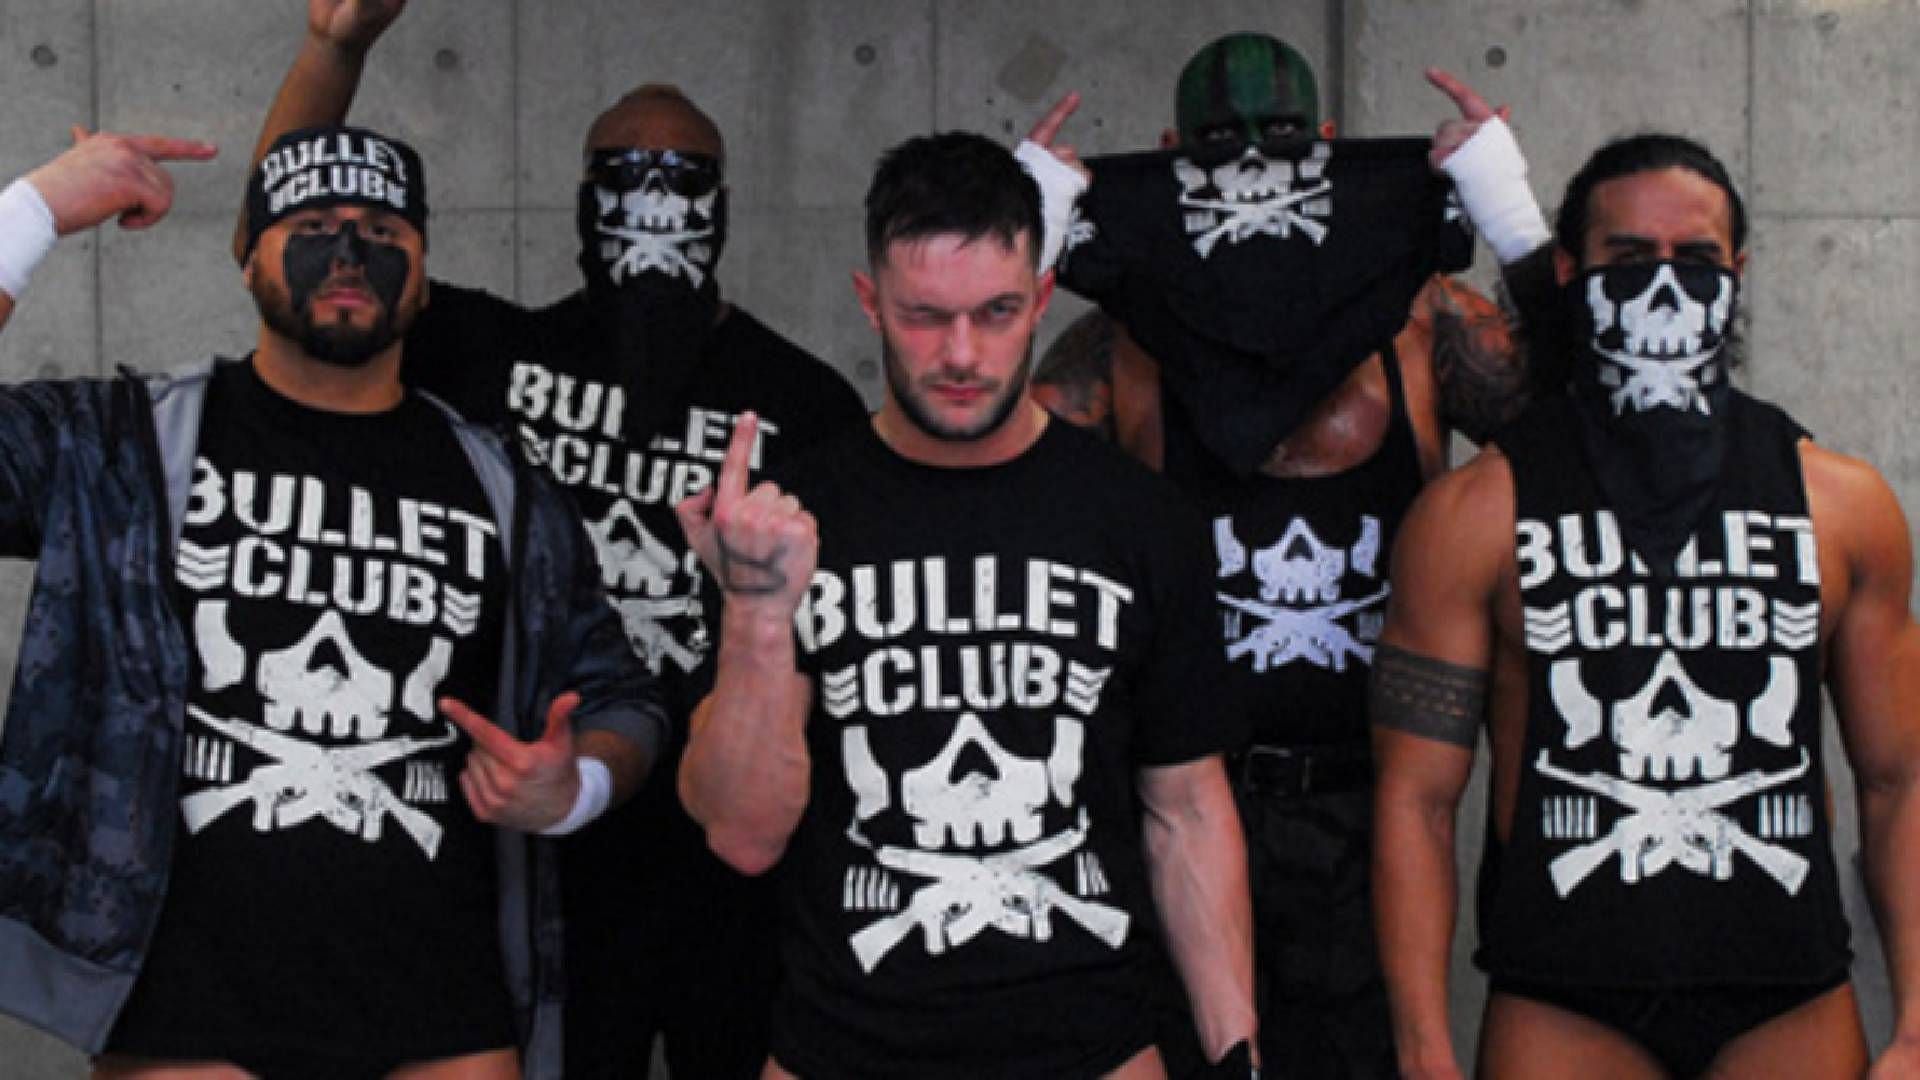 The Bullet Club